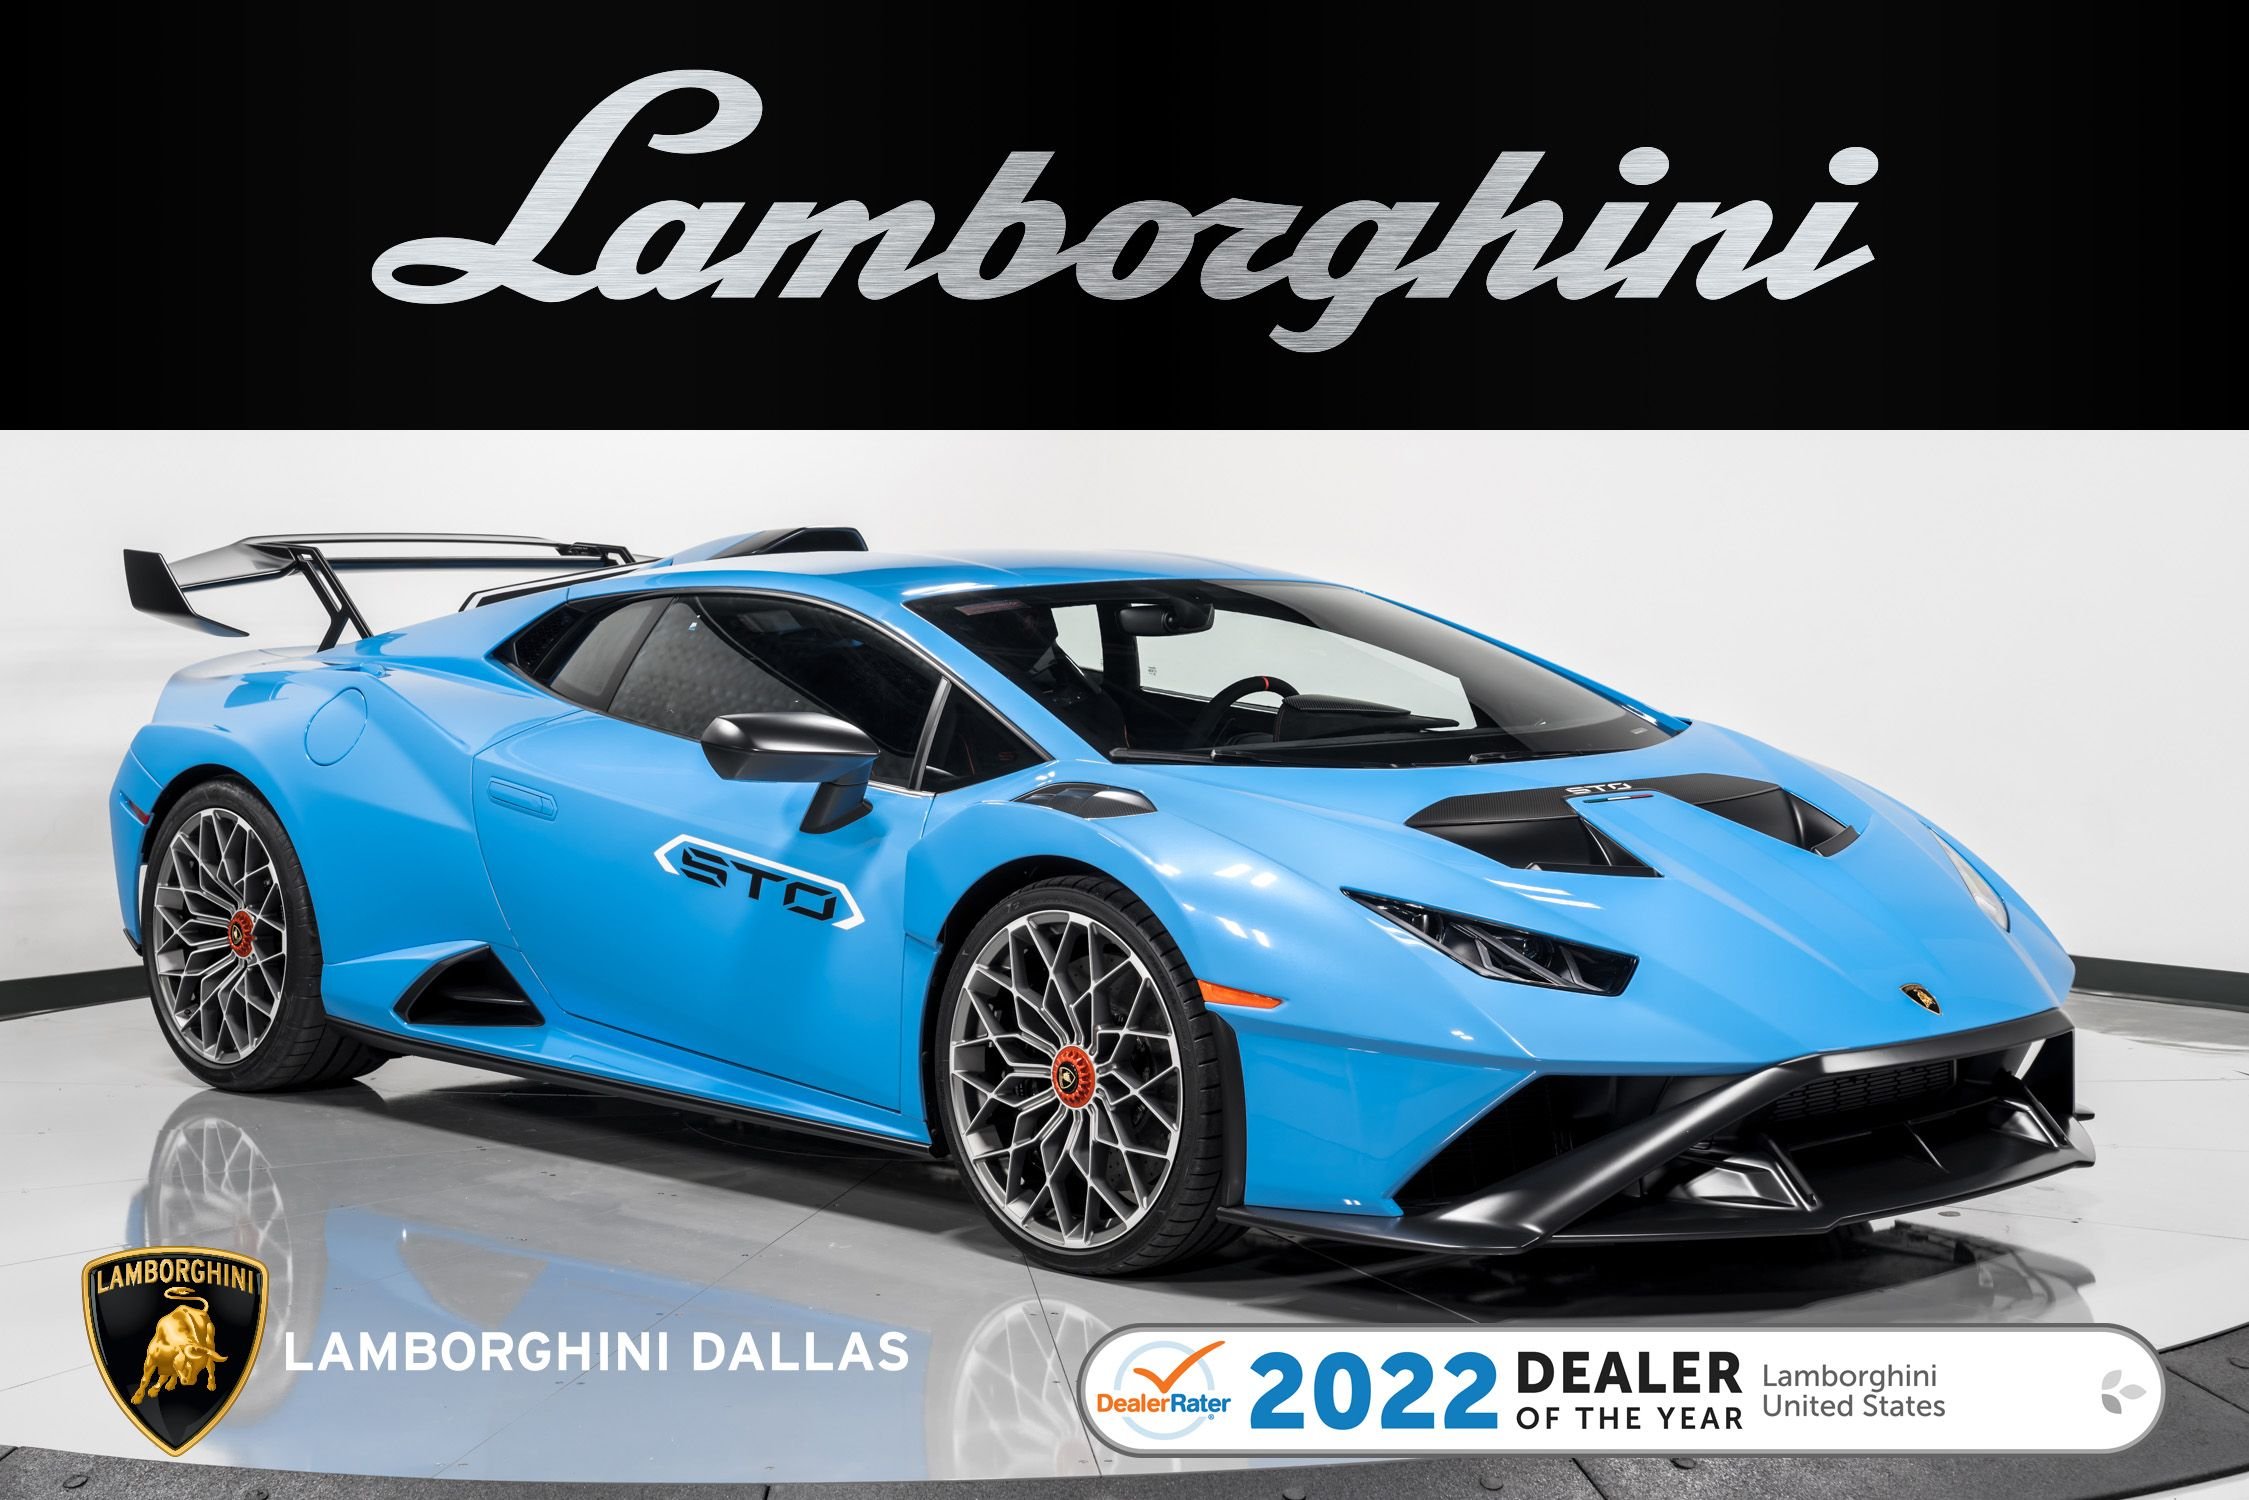 Used 2022 Lamborghini Huracan STO For Sale Richardson,TX | Stock 